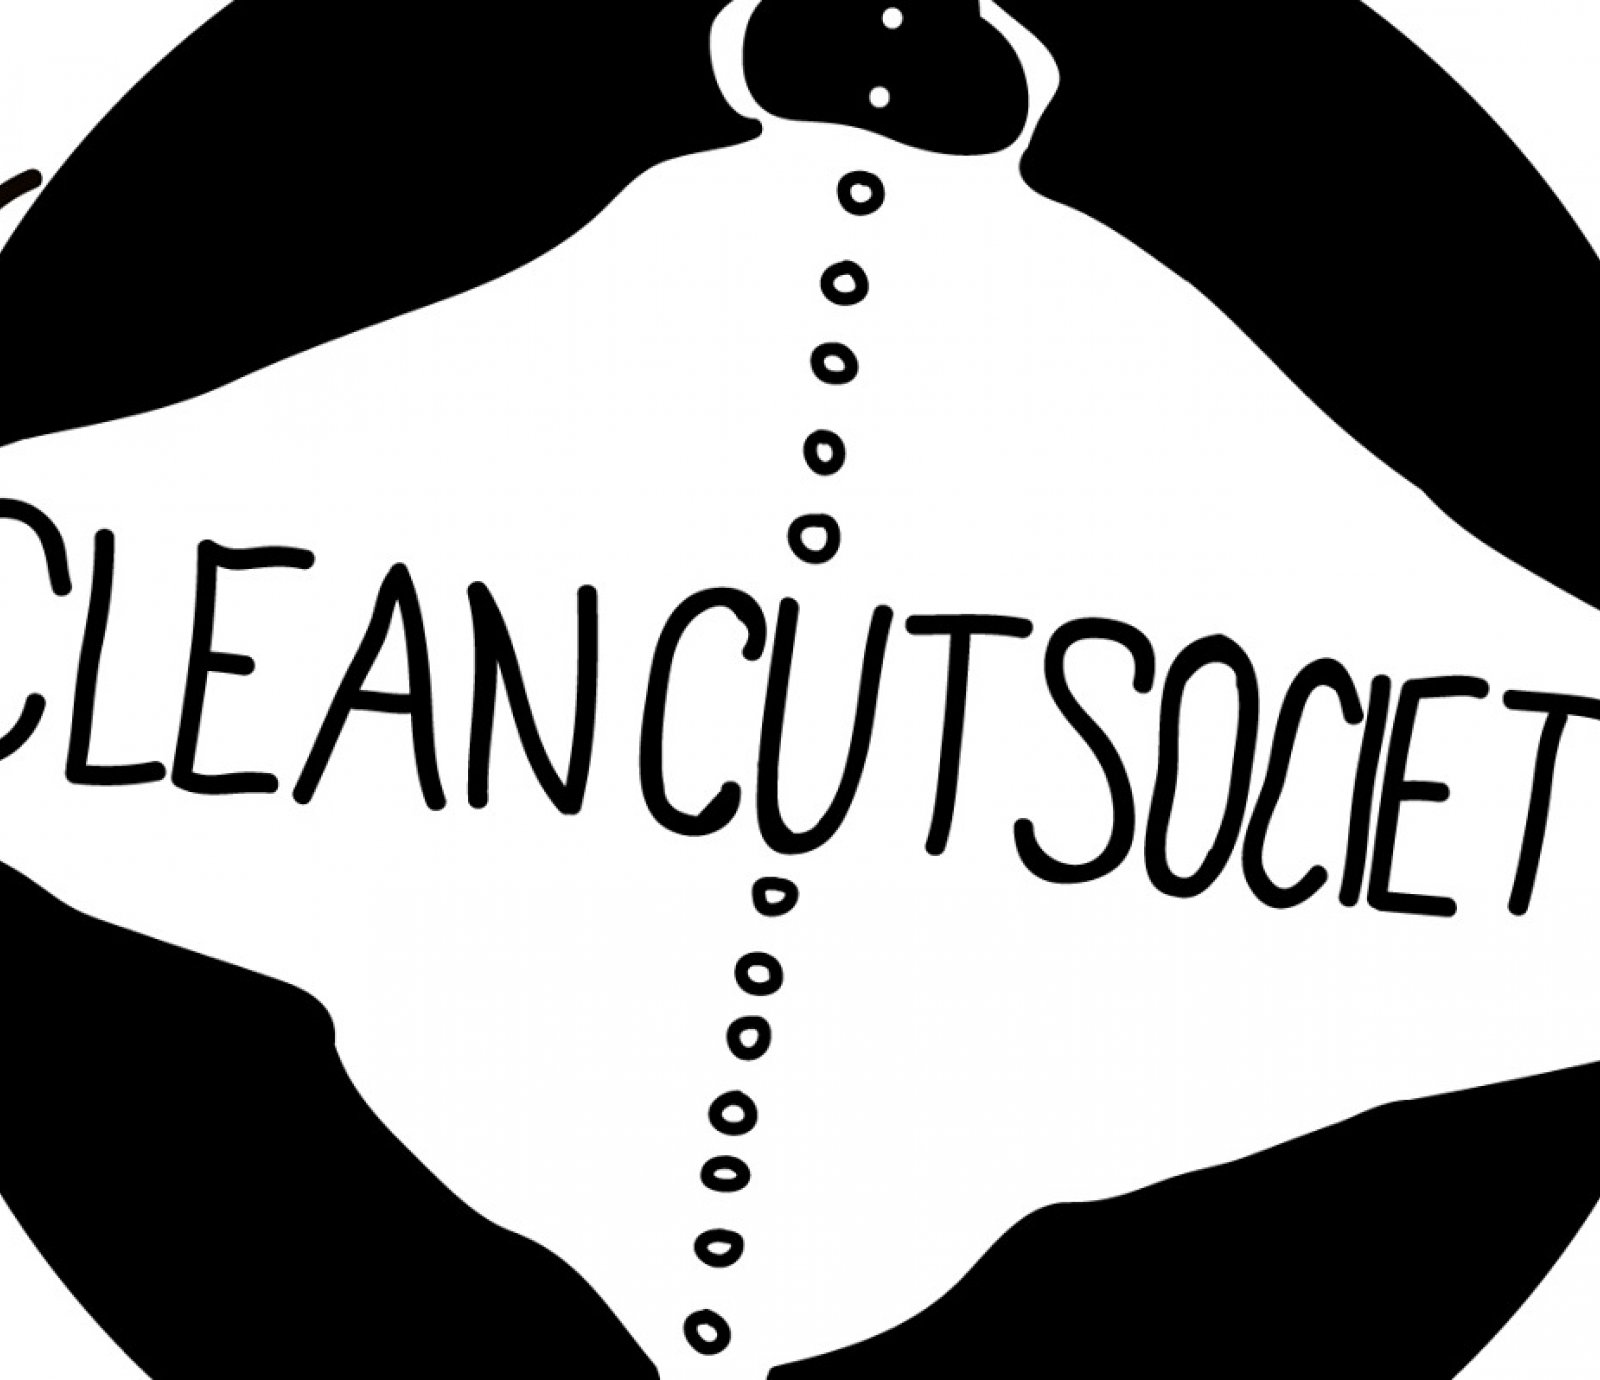 Clean Cut Society